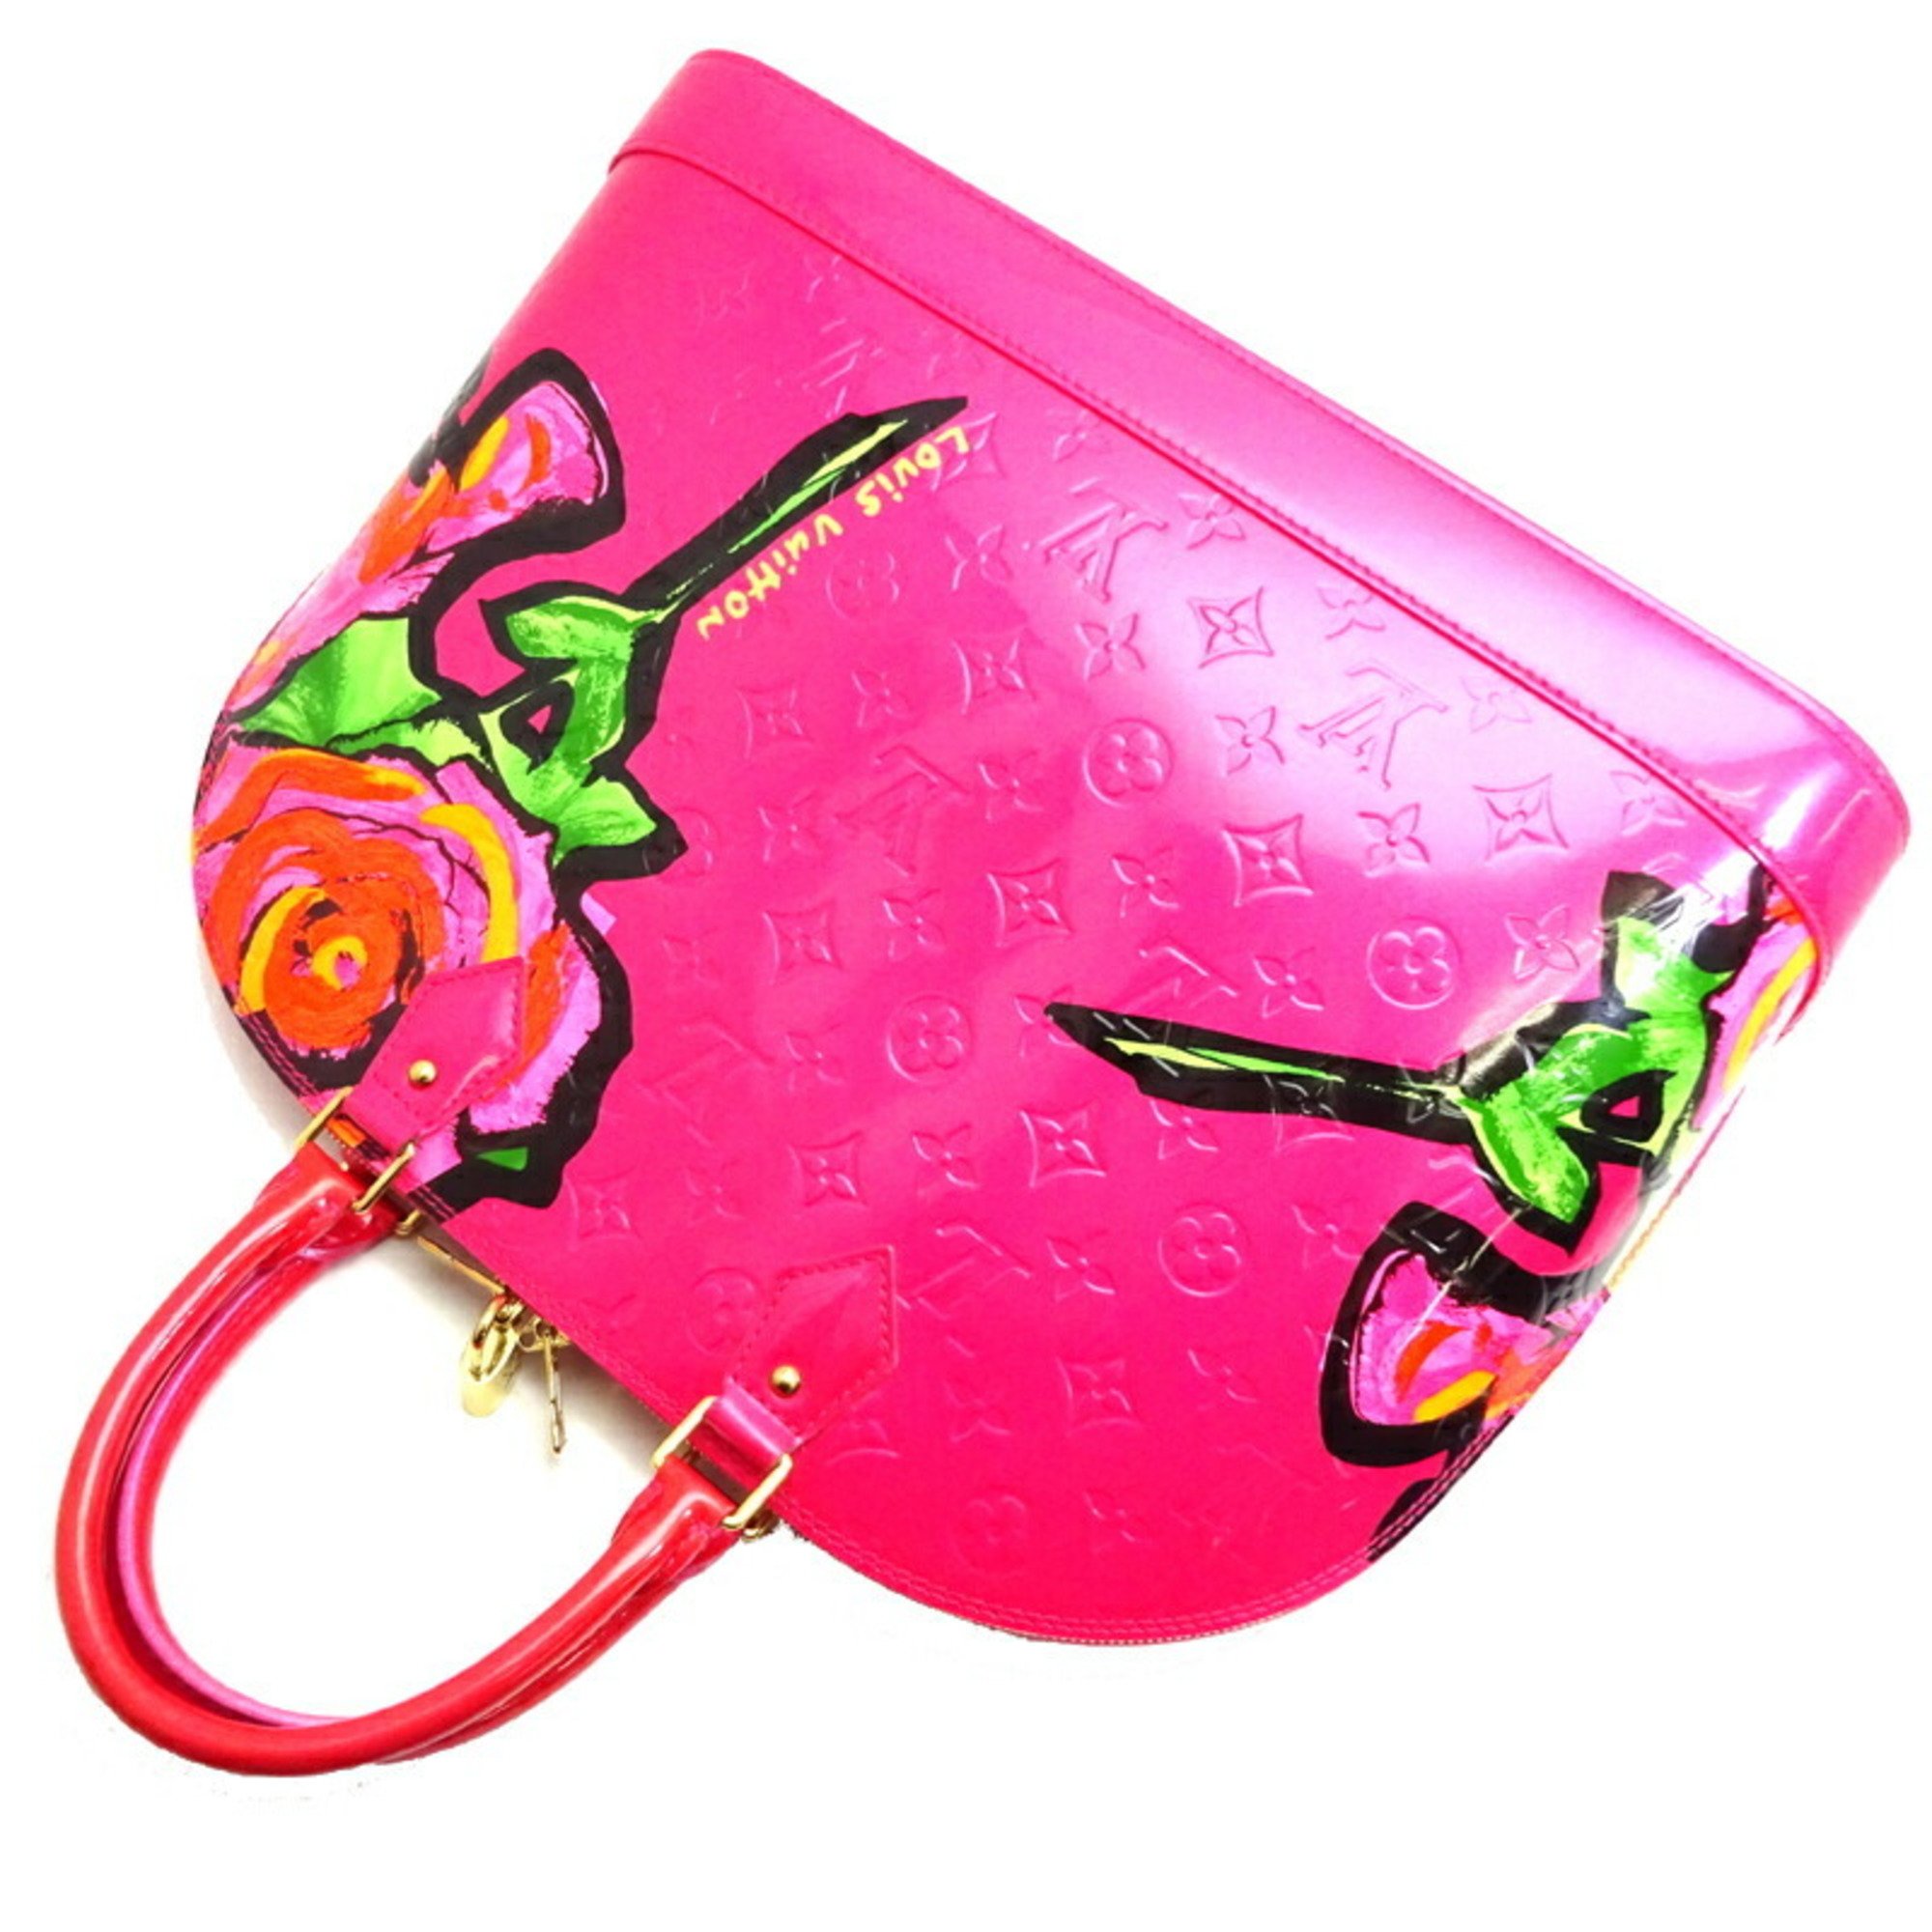 Louis Vuitton Alma MM Women's Handbag M93686() Vernis Rose Pop (Pink)